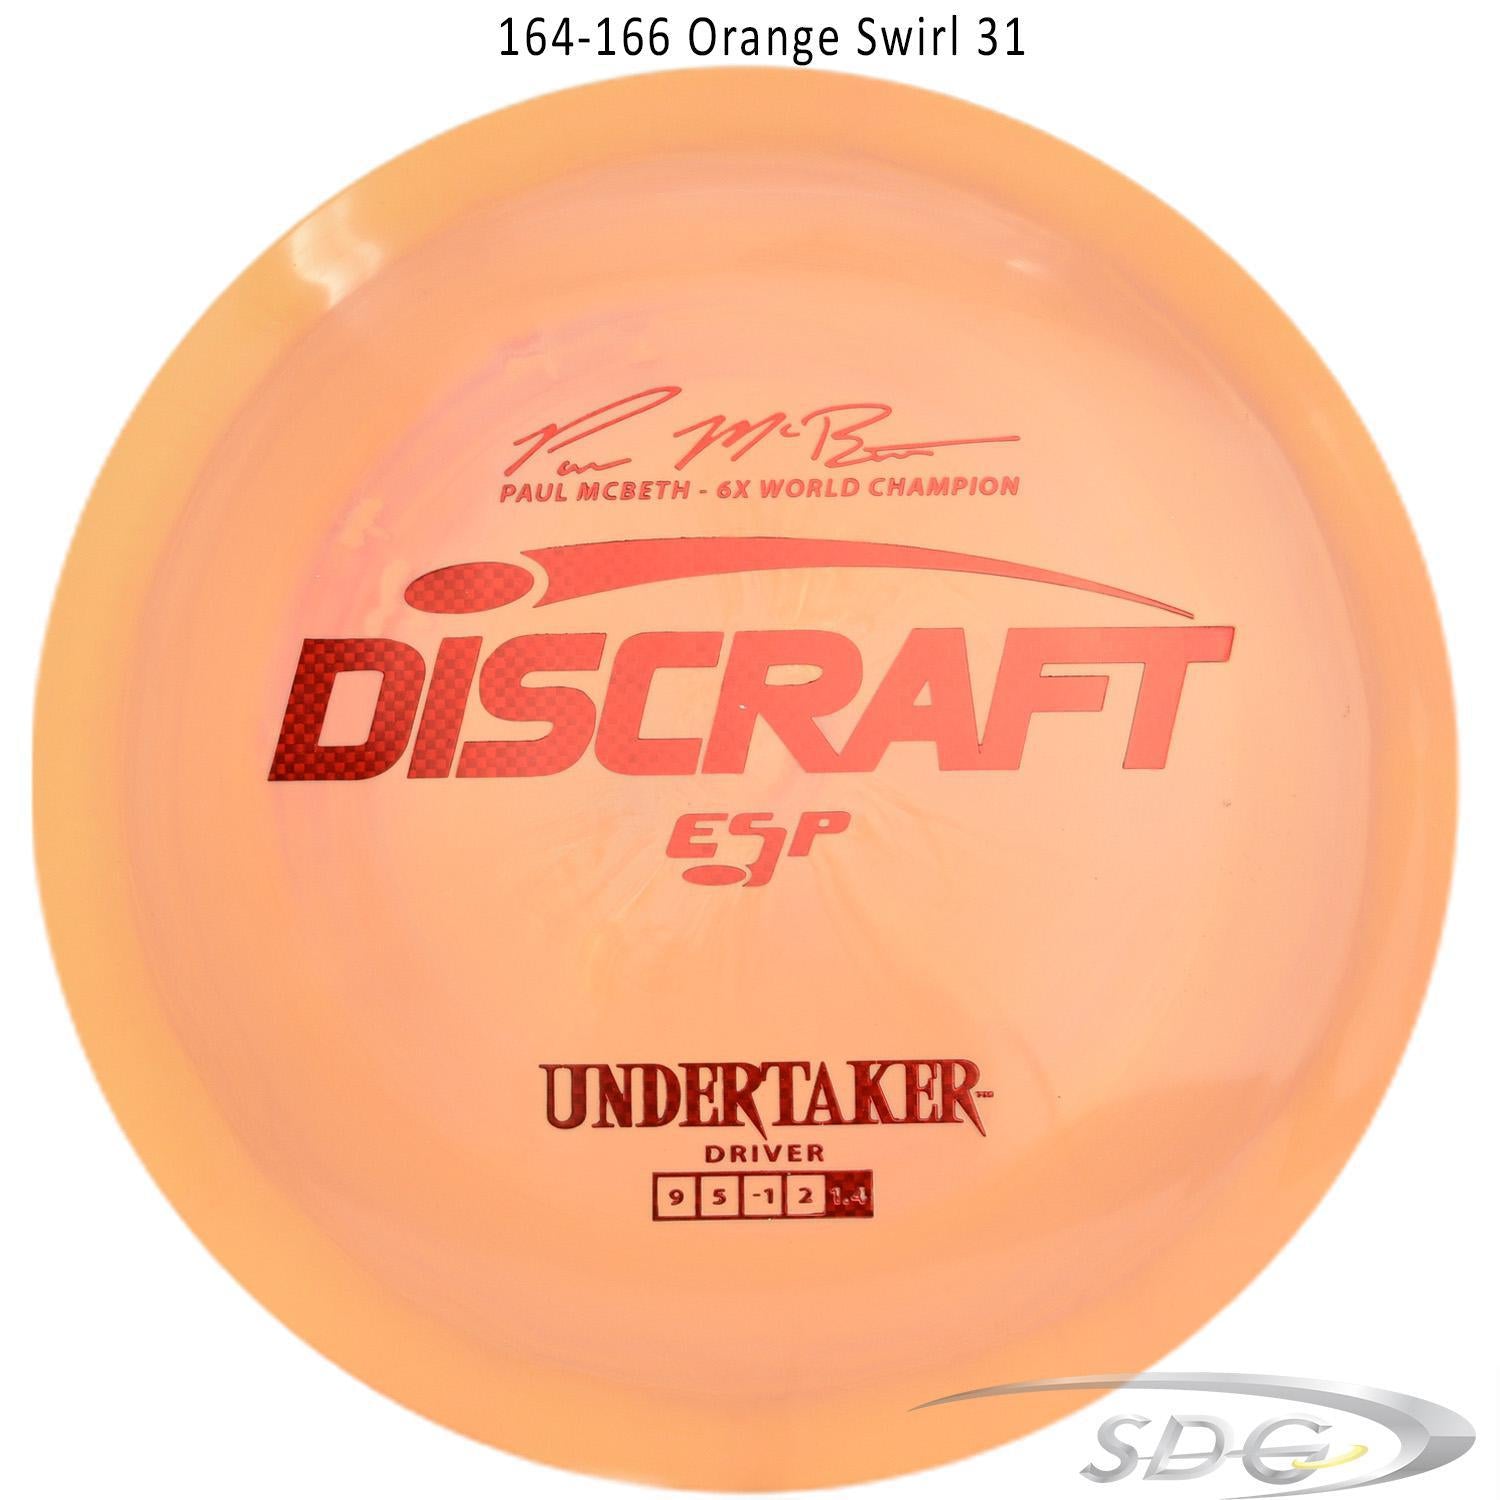 discraft-esp-undertaker-6x-paul-mcbeth-signature-series-disc-golf-distance-driver-169-160-weights 164-166 Orange Swirl 31 